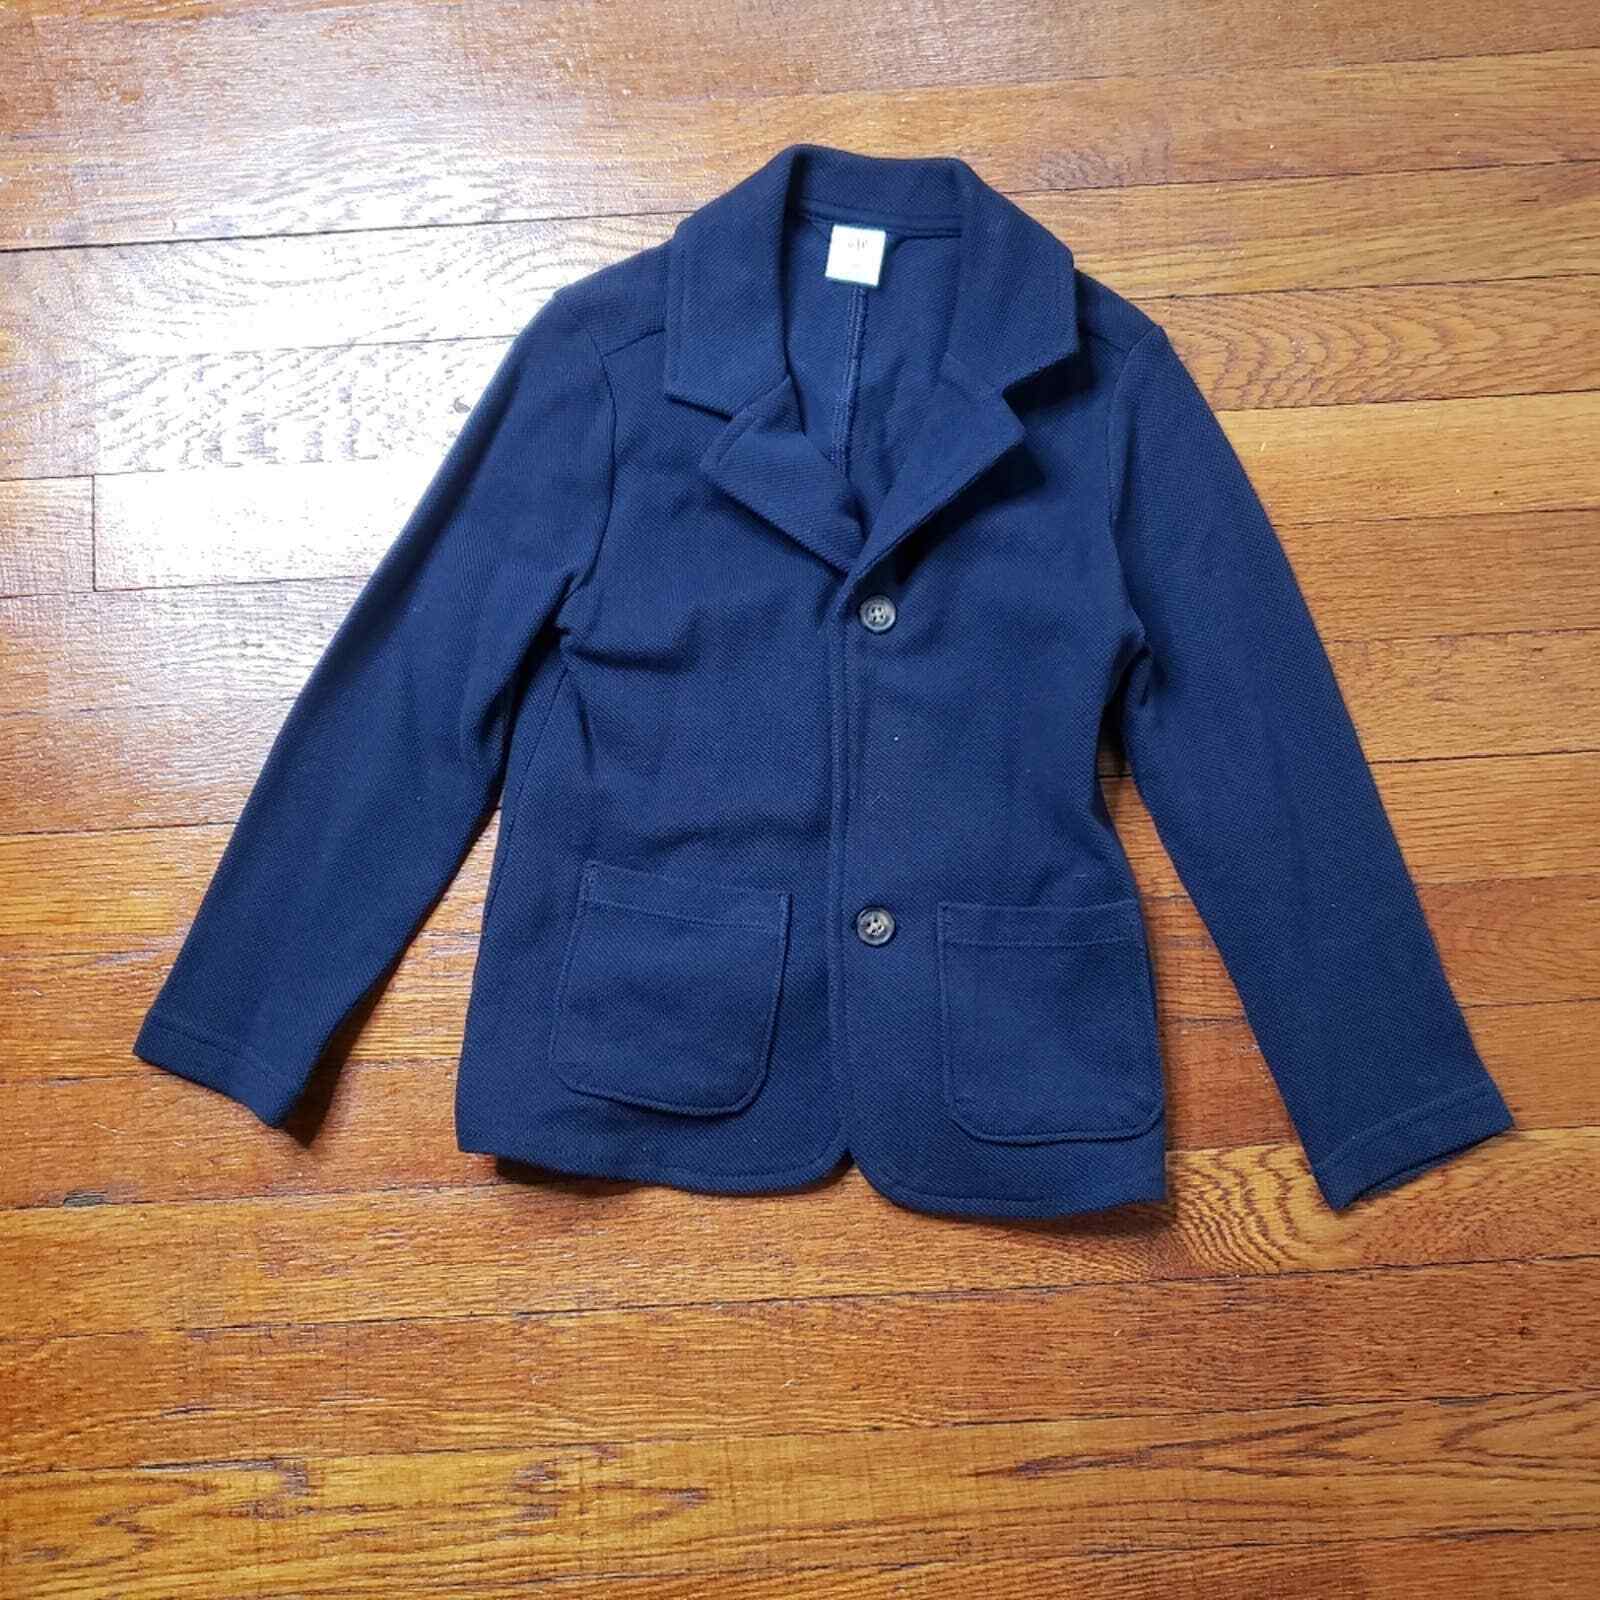 Gap Navy Blue Knit Blazer Size 5